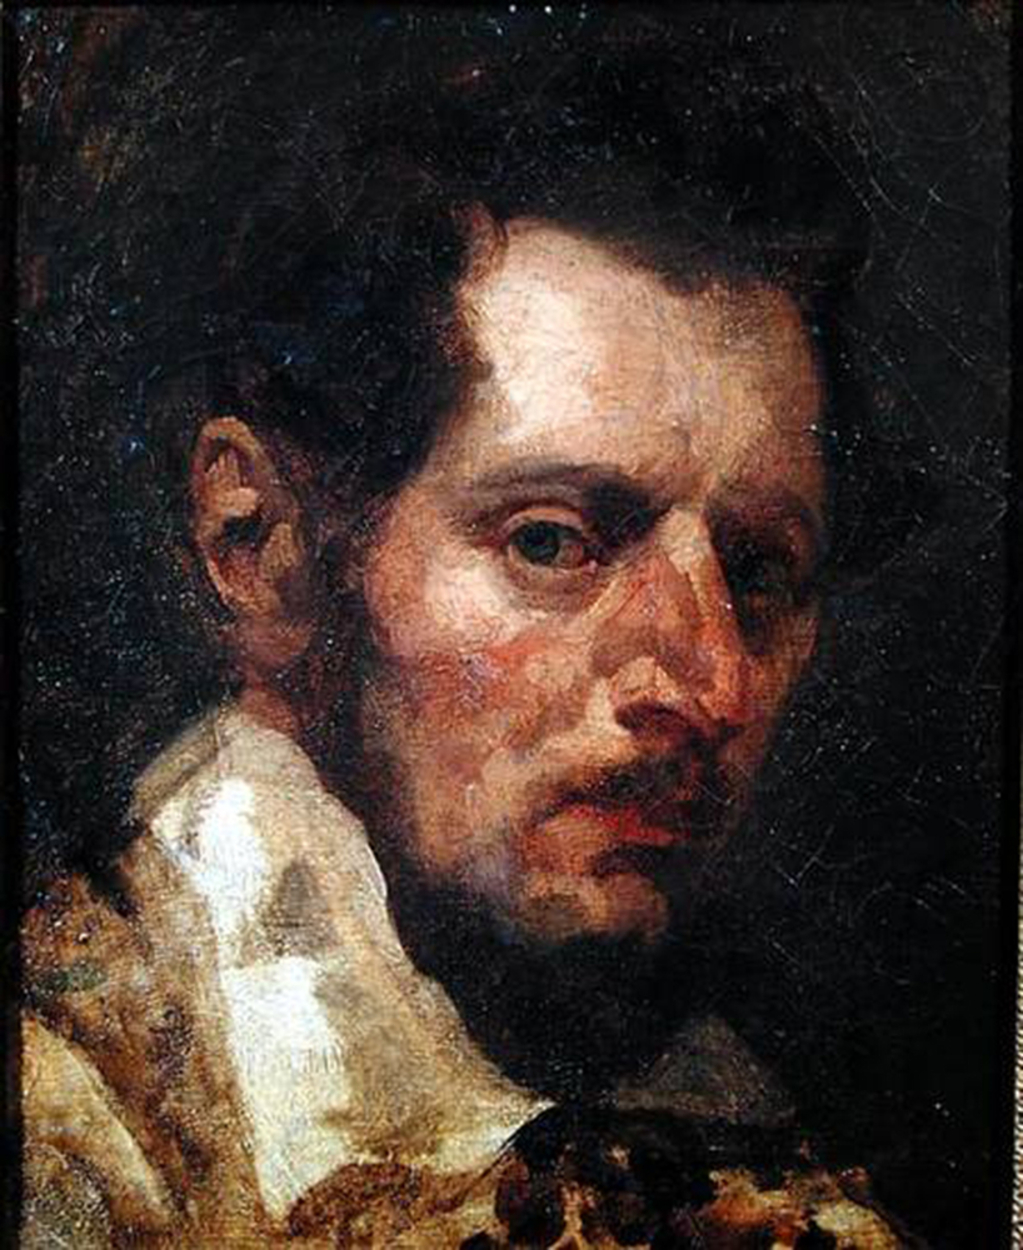 Théodore Géricault - September 26, 1791 - January 26, 1824